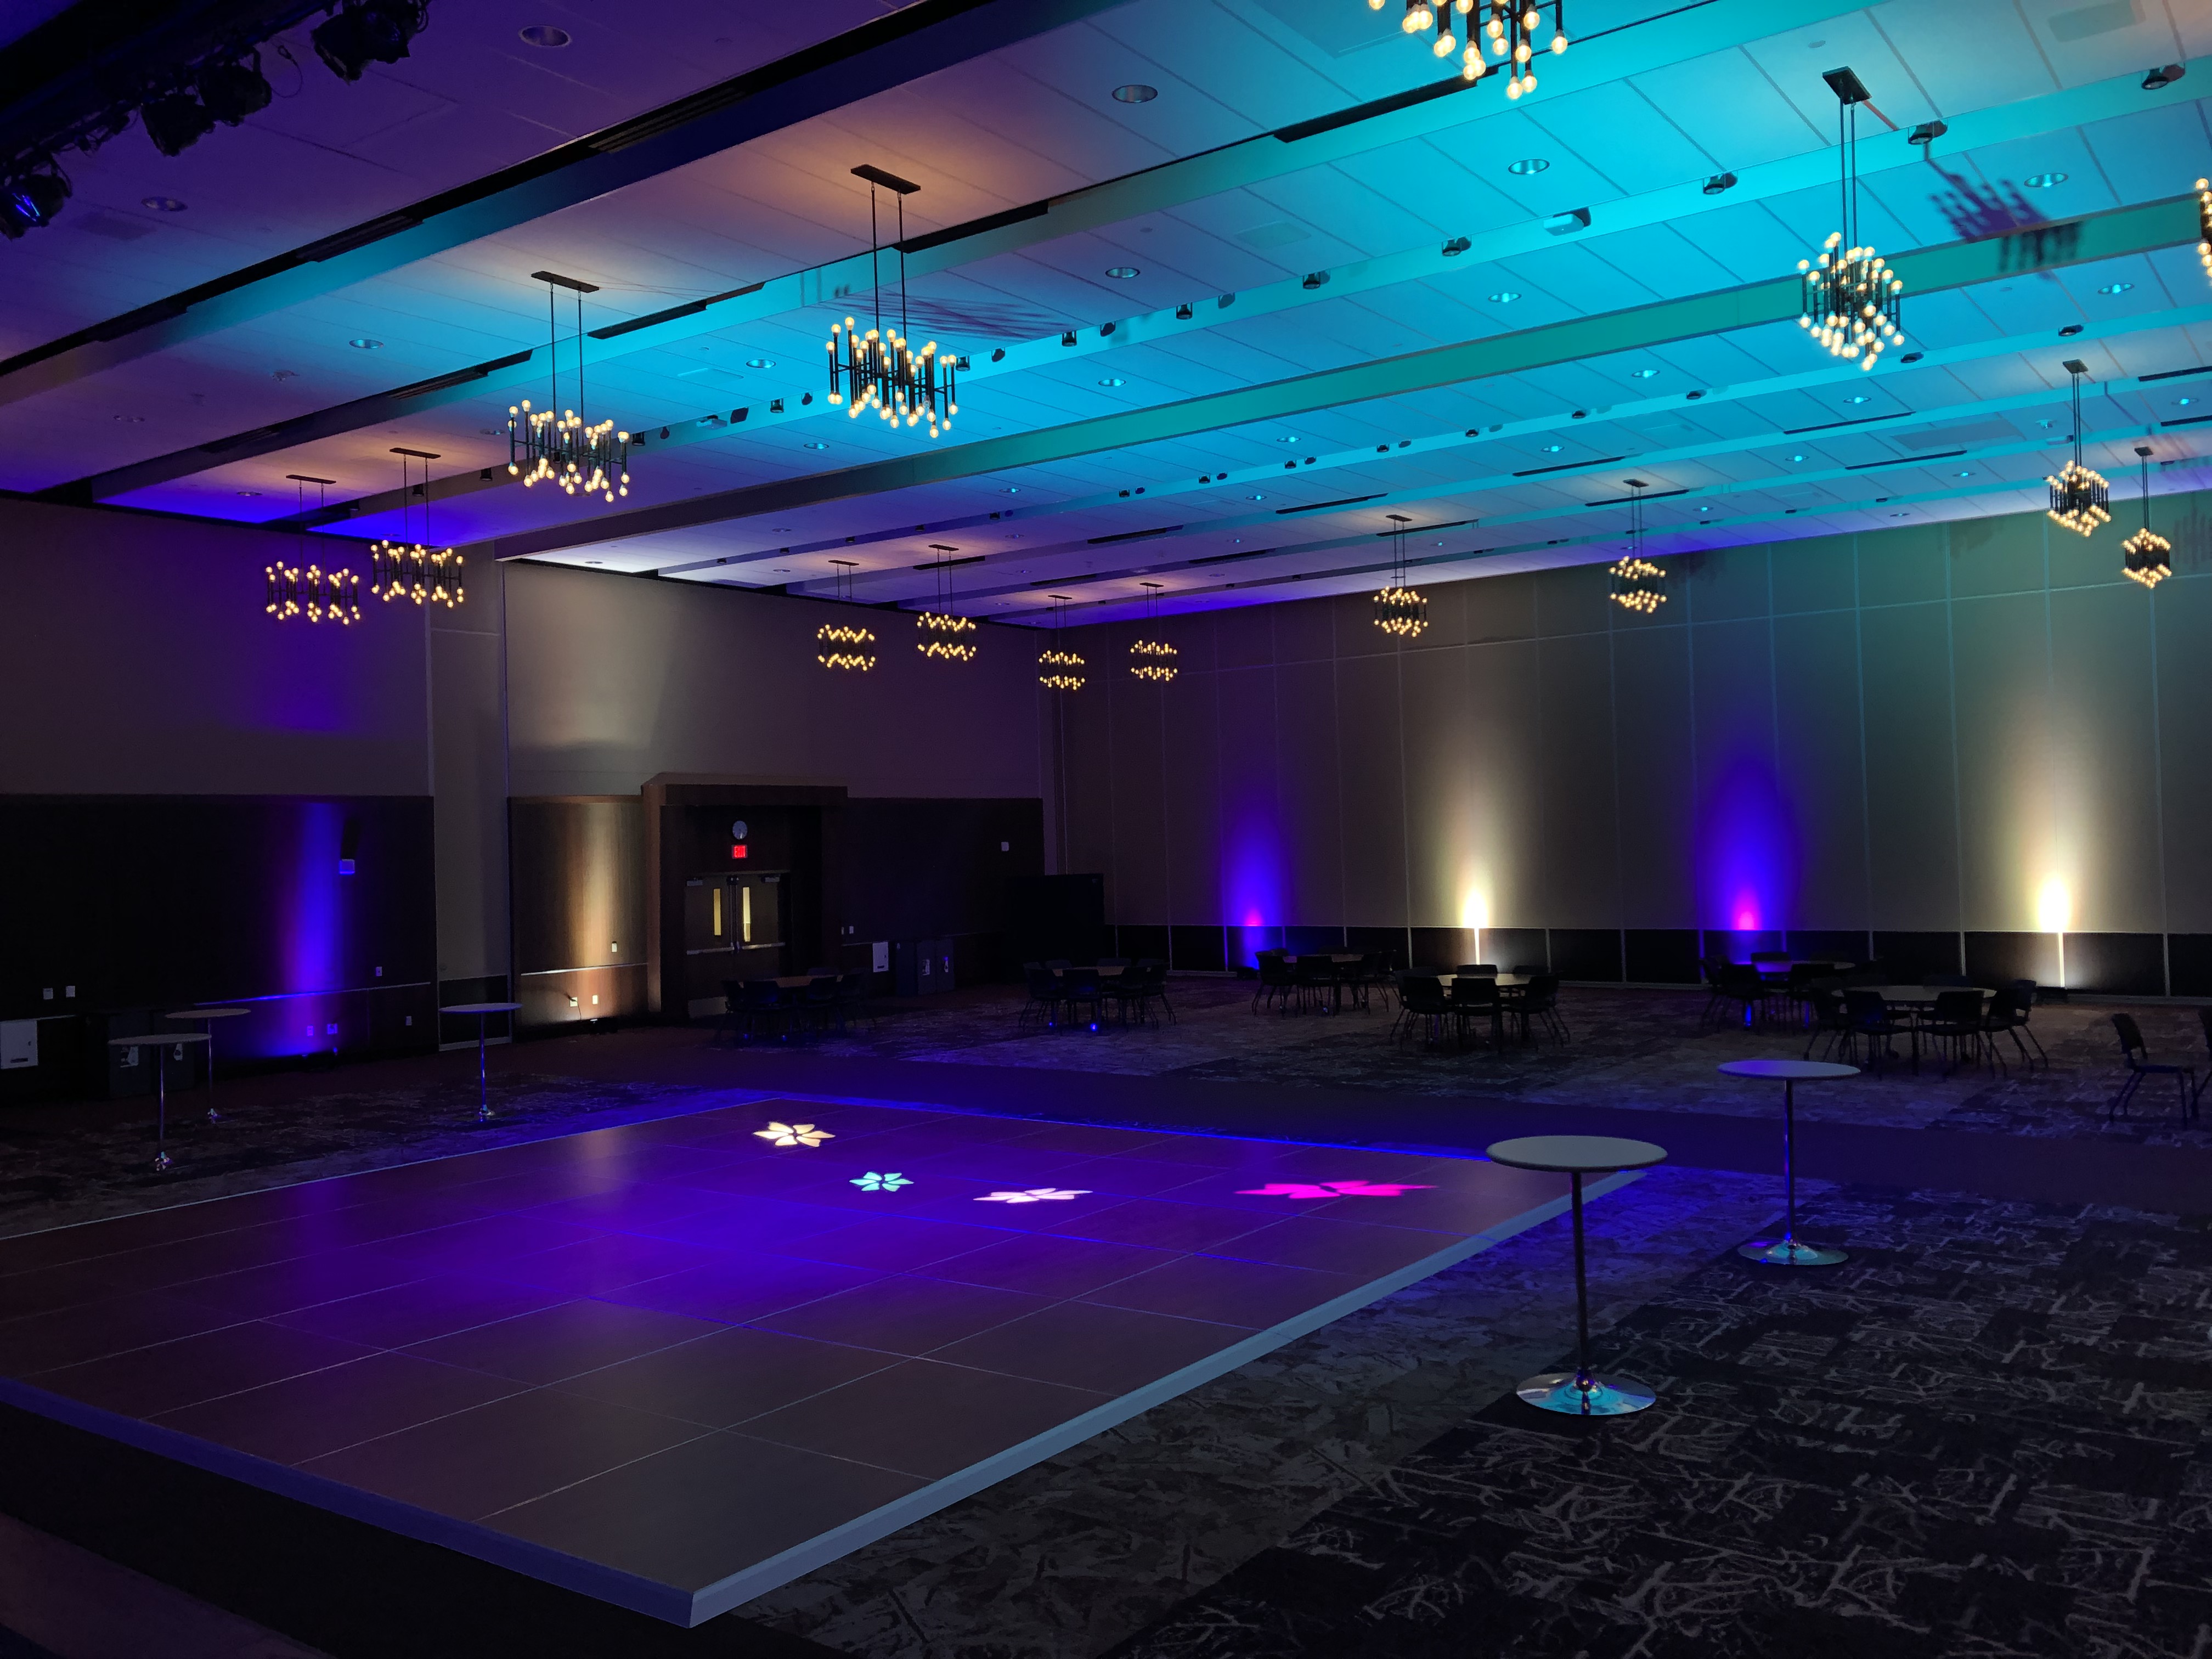 Bluffs ballroom with uplighting effects